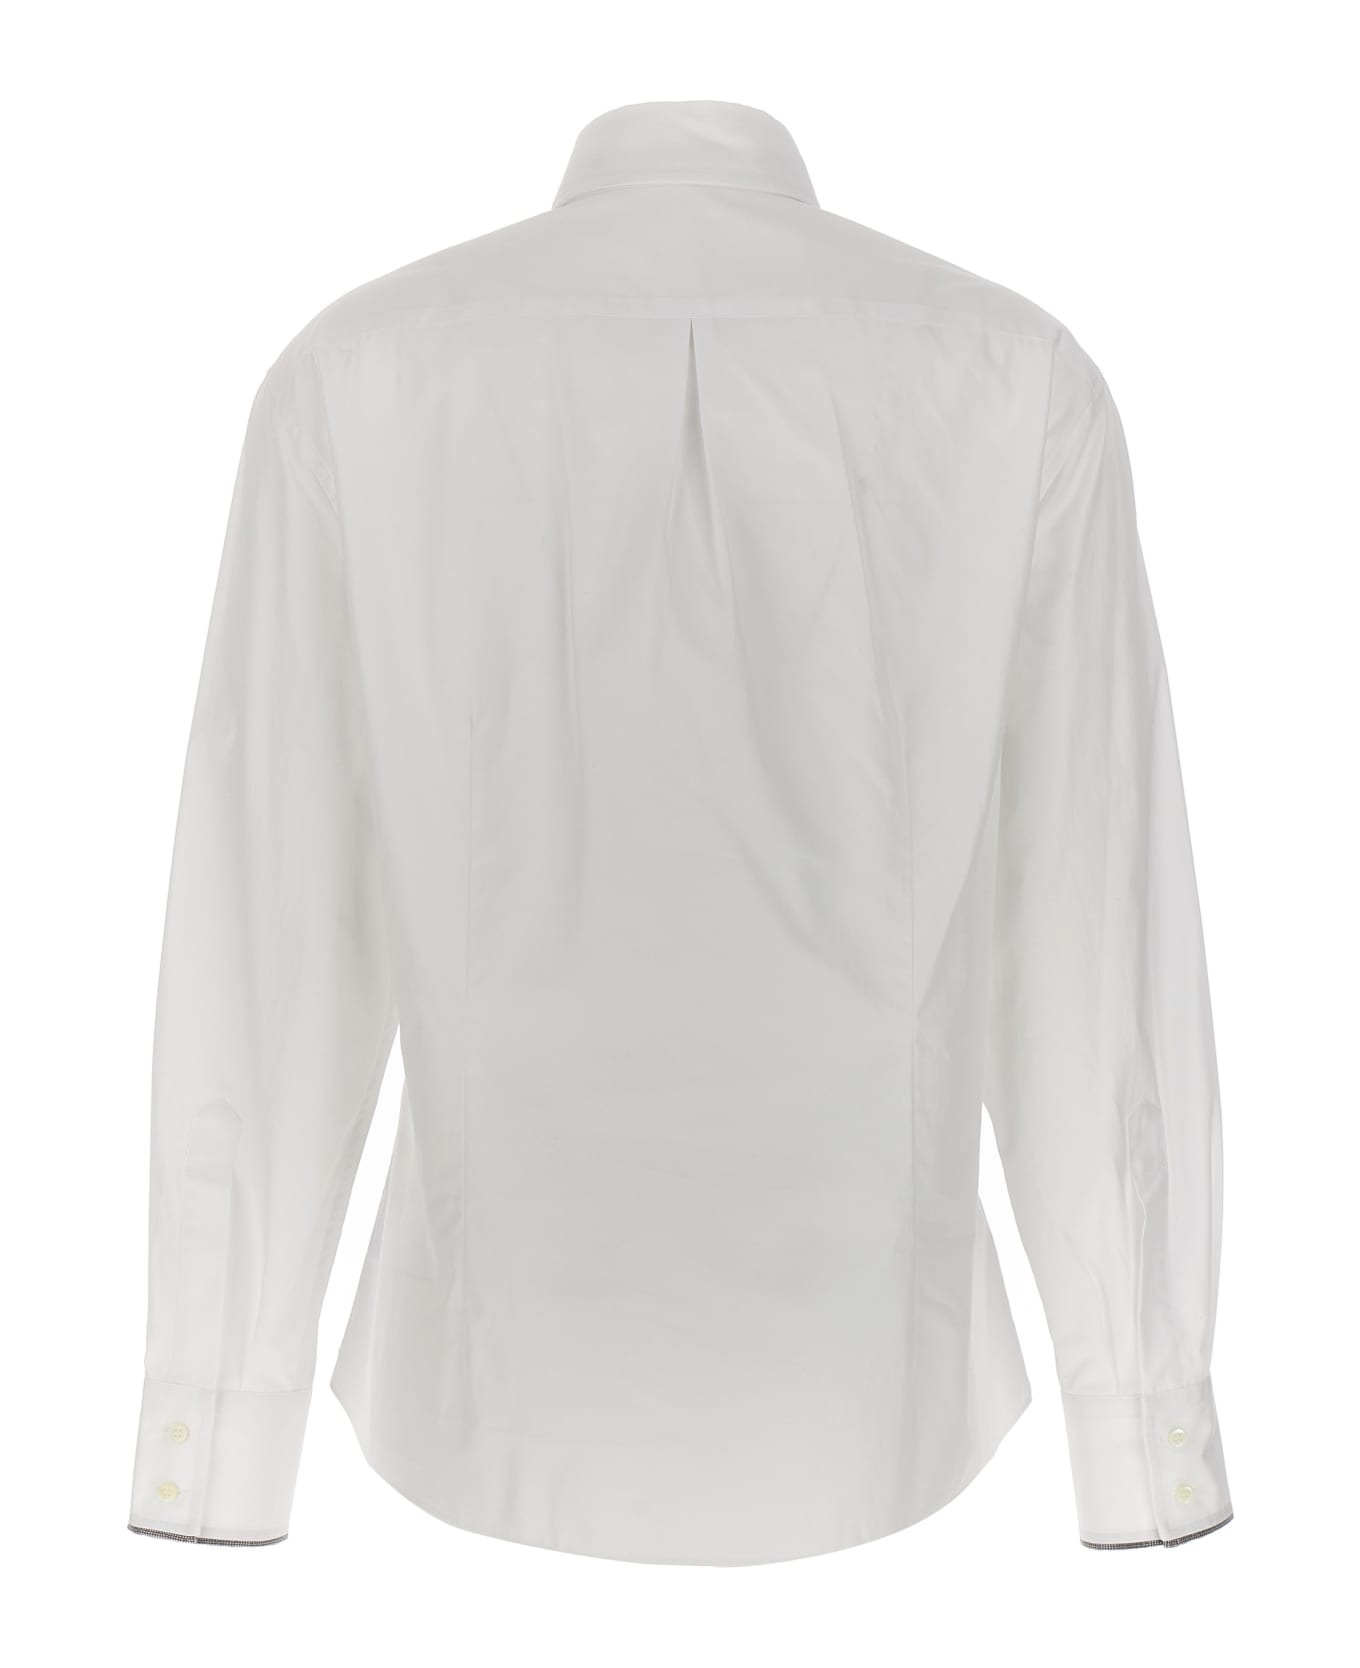 Brunello Cucinelli Cotton Poplin Shirt - White